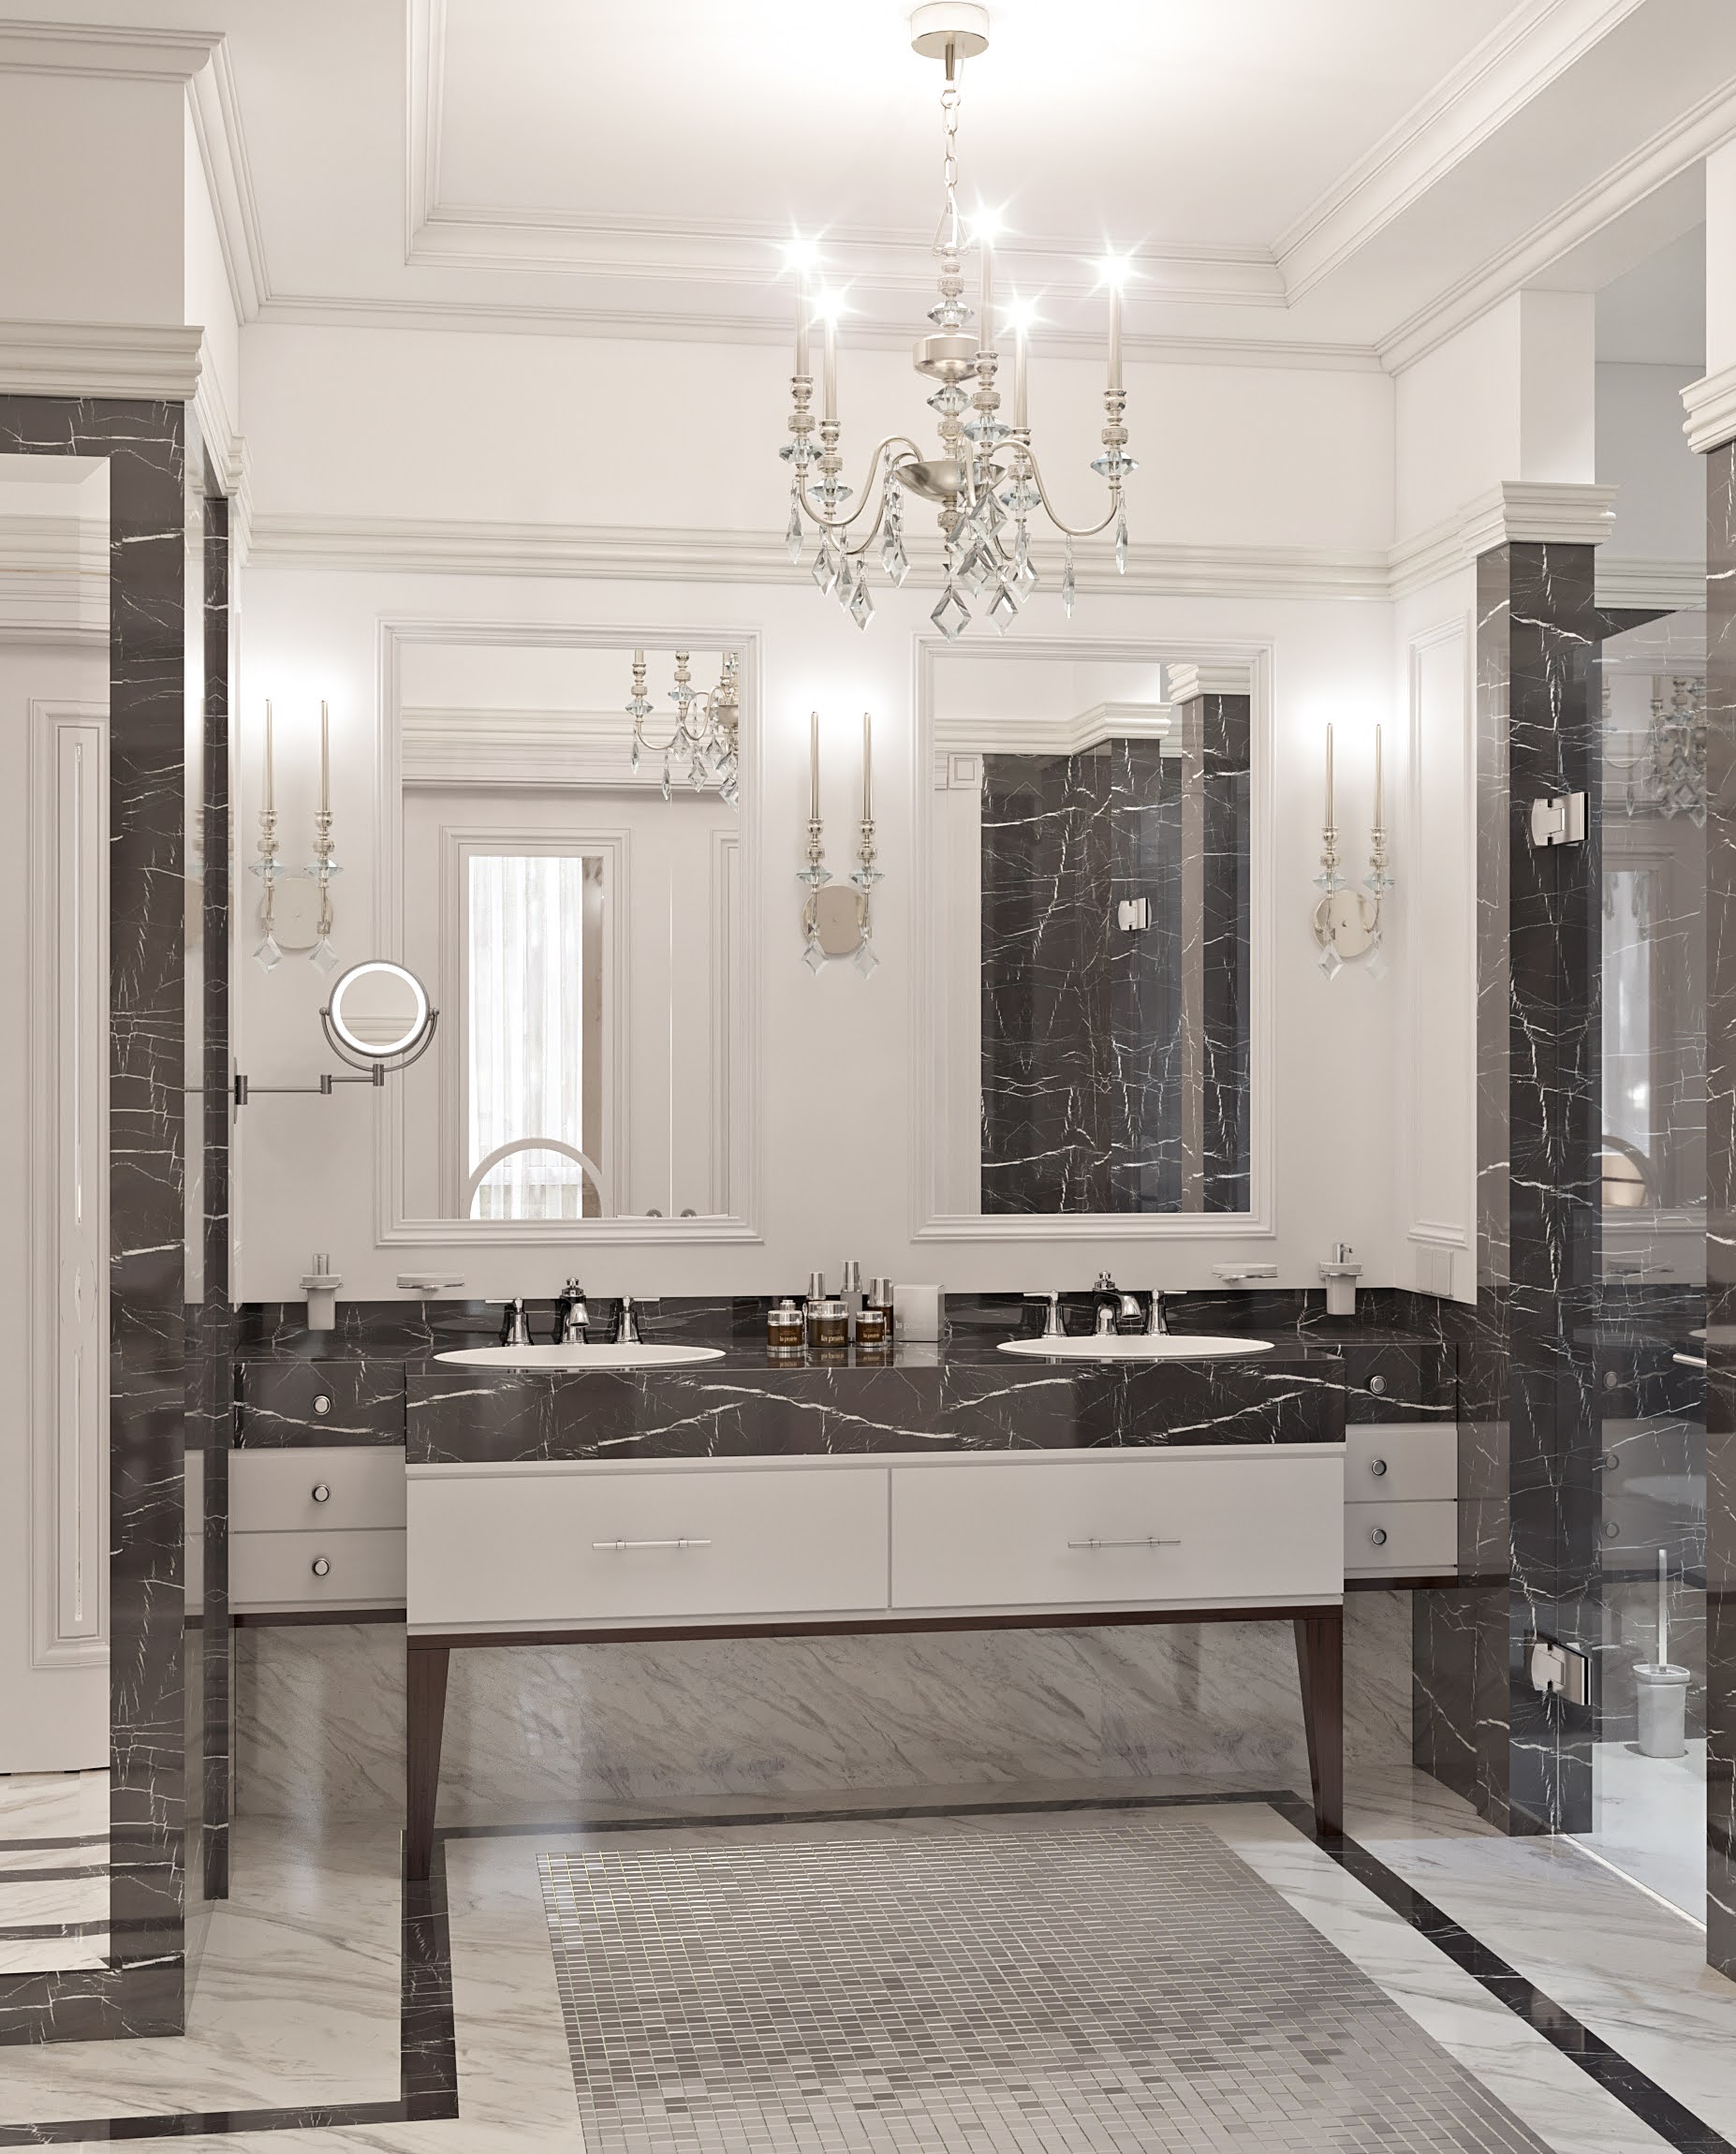 Bathroom - Presidential suite interior, the Hilton hotel, Tashkent